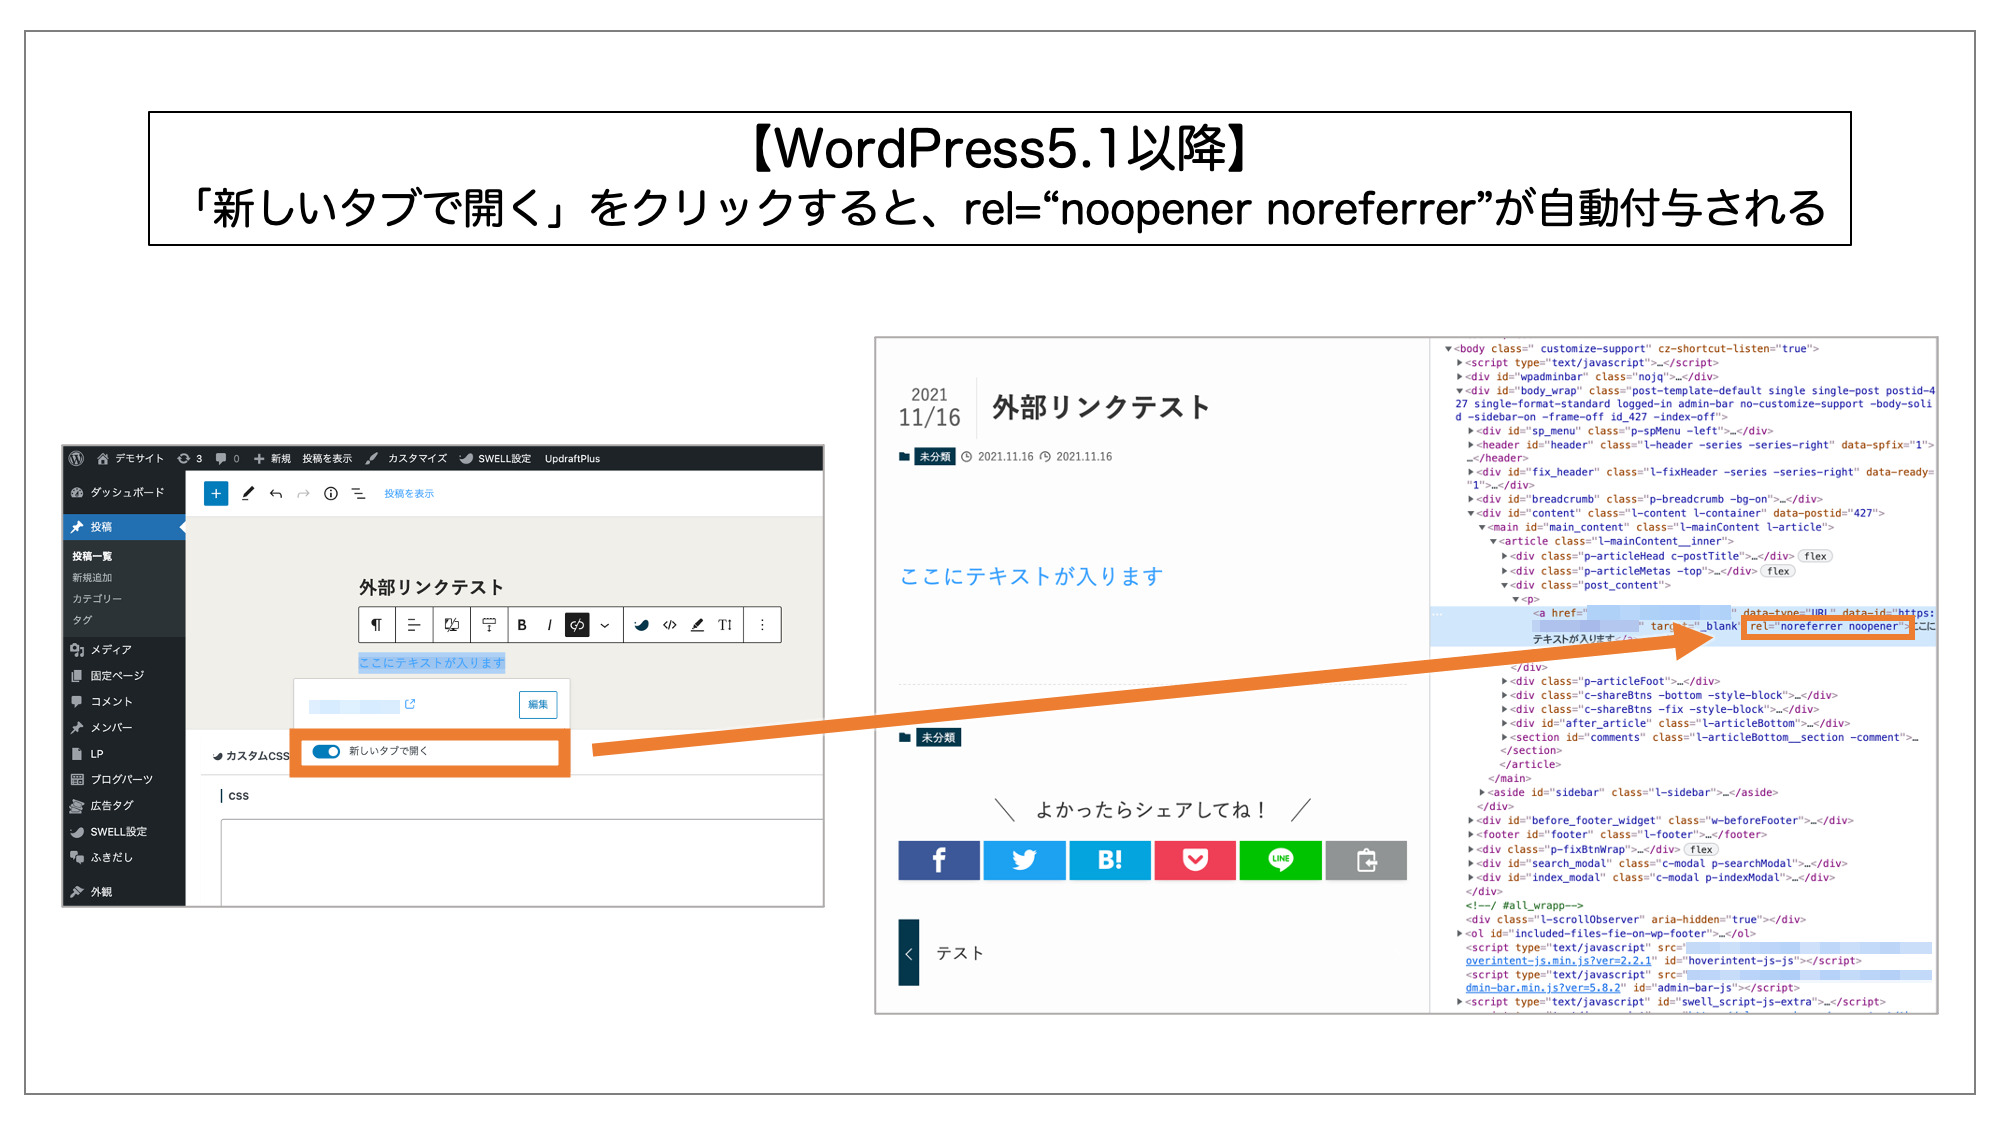 WordPress5.1以降では、「新しいタブで開く」をクリックすると、rel=“noopener noreferrer”が自動付与される